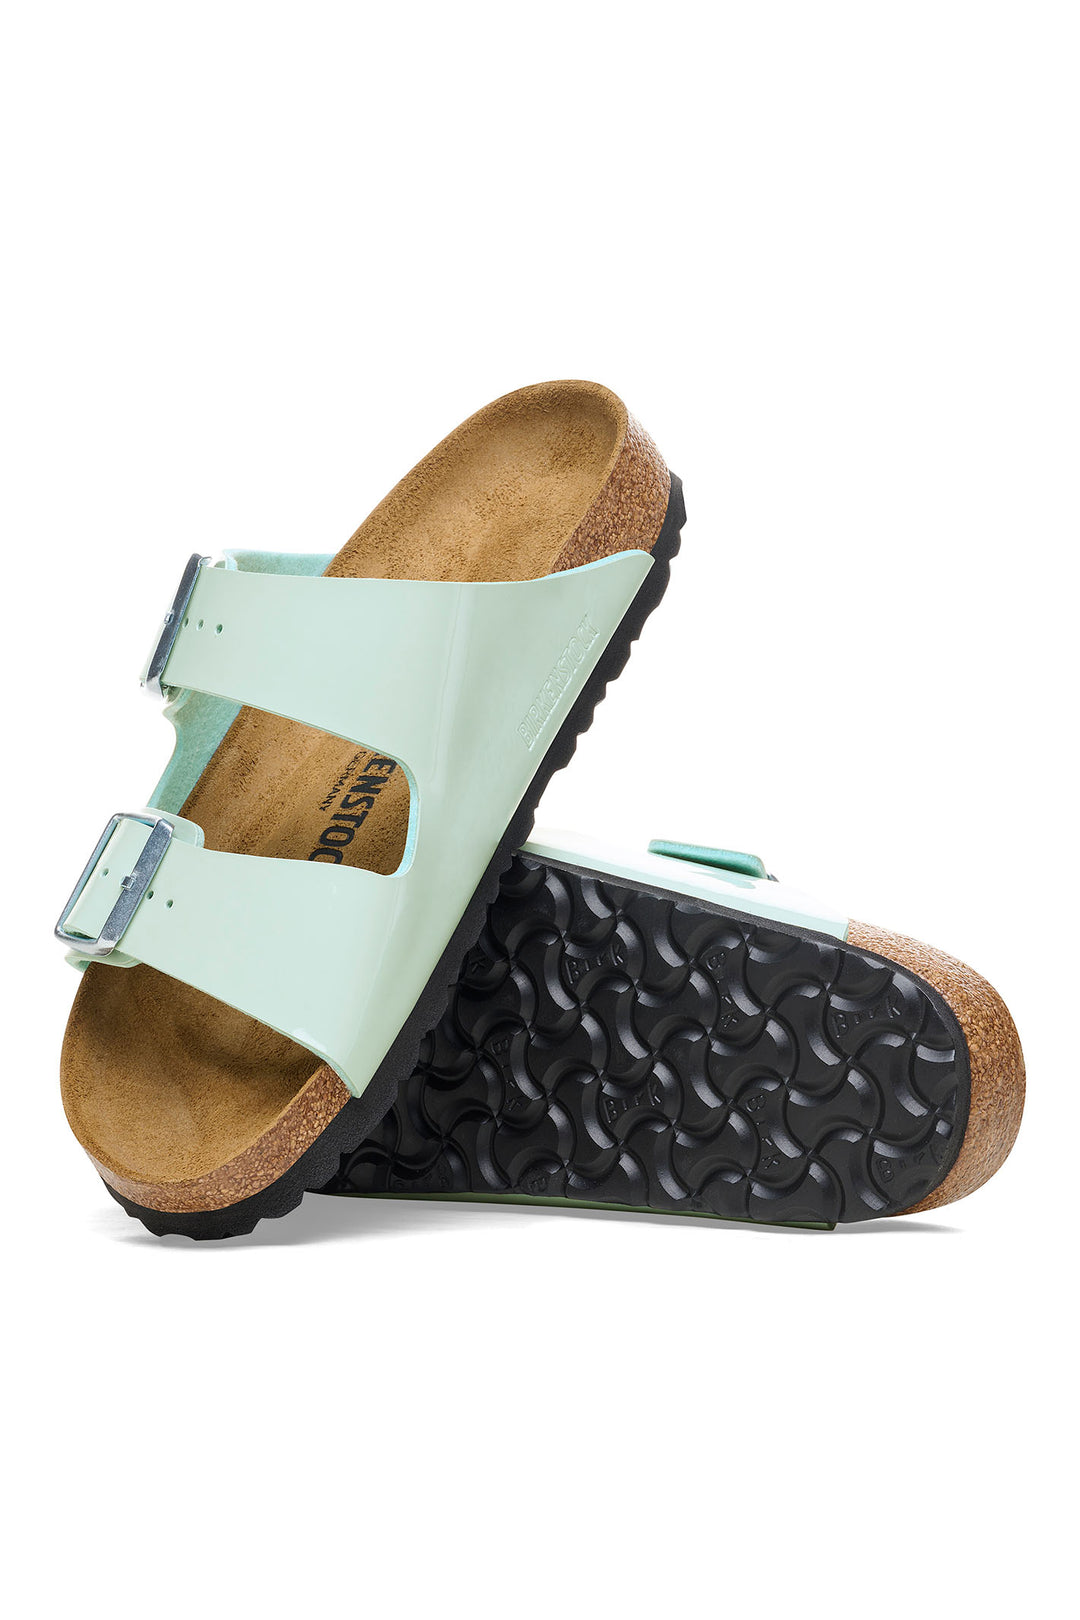 Birkenstock Arizona 1026963 Surf Green Birko-Flor Patent Leather Narrow Fit Sandal - Shirley Allum Boutique